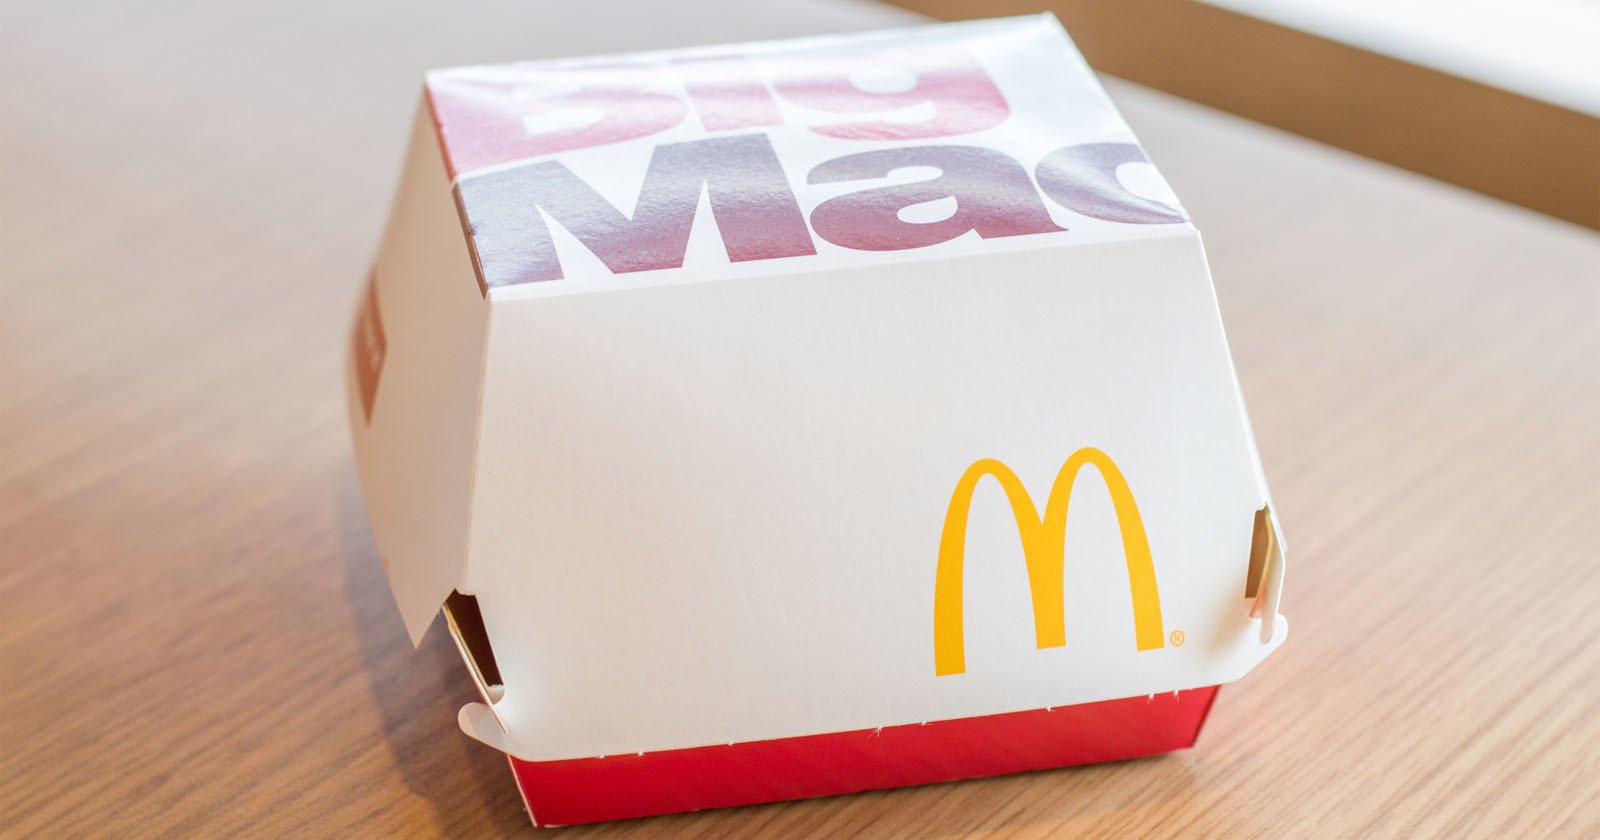  mcdonald wendy sued misleading photos burgers 